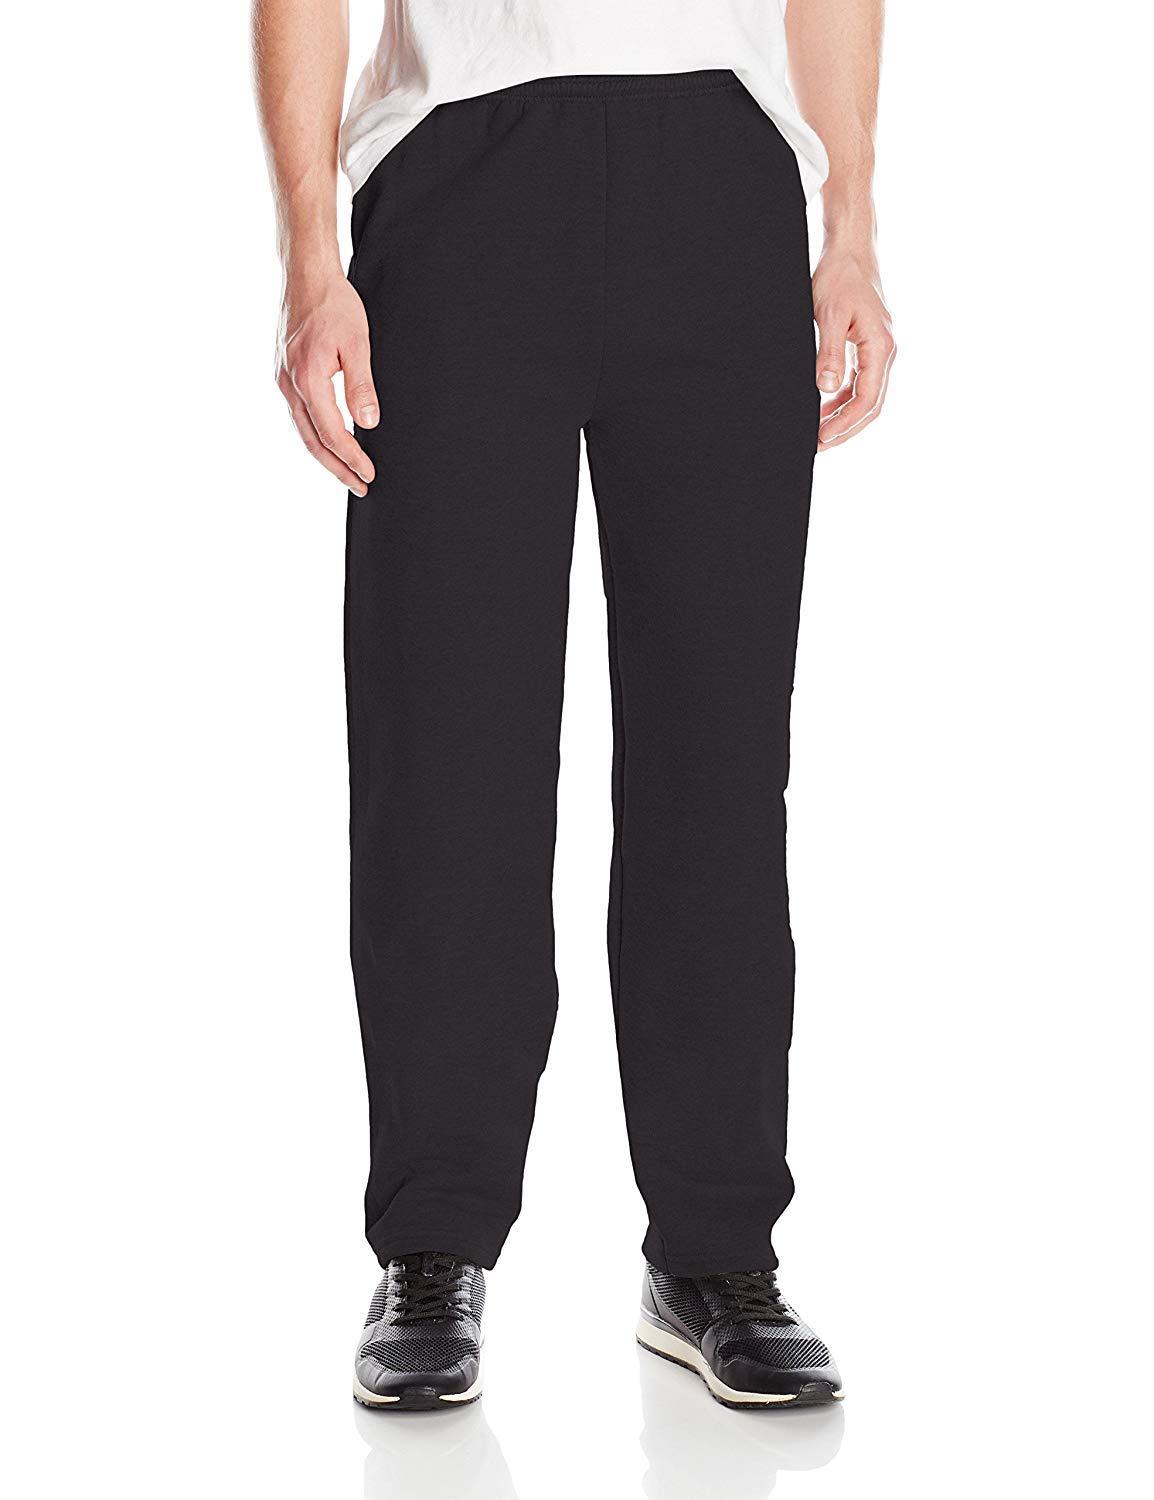 Hanes Men's Sweatpants, EcoSmart Fleece Sweatpants, Cotton-Blend